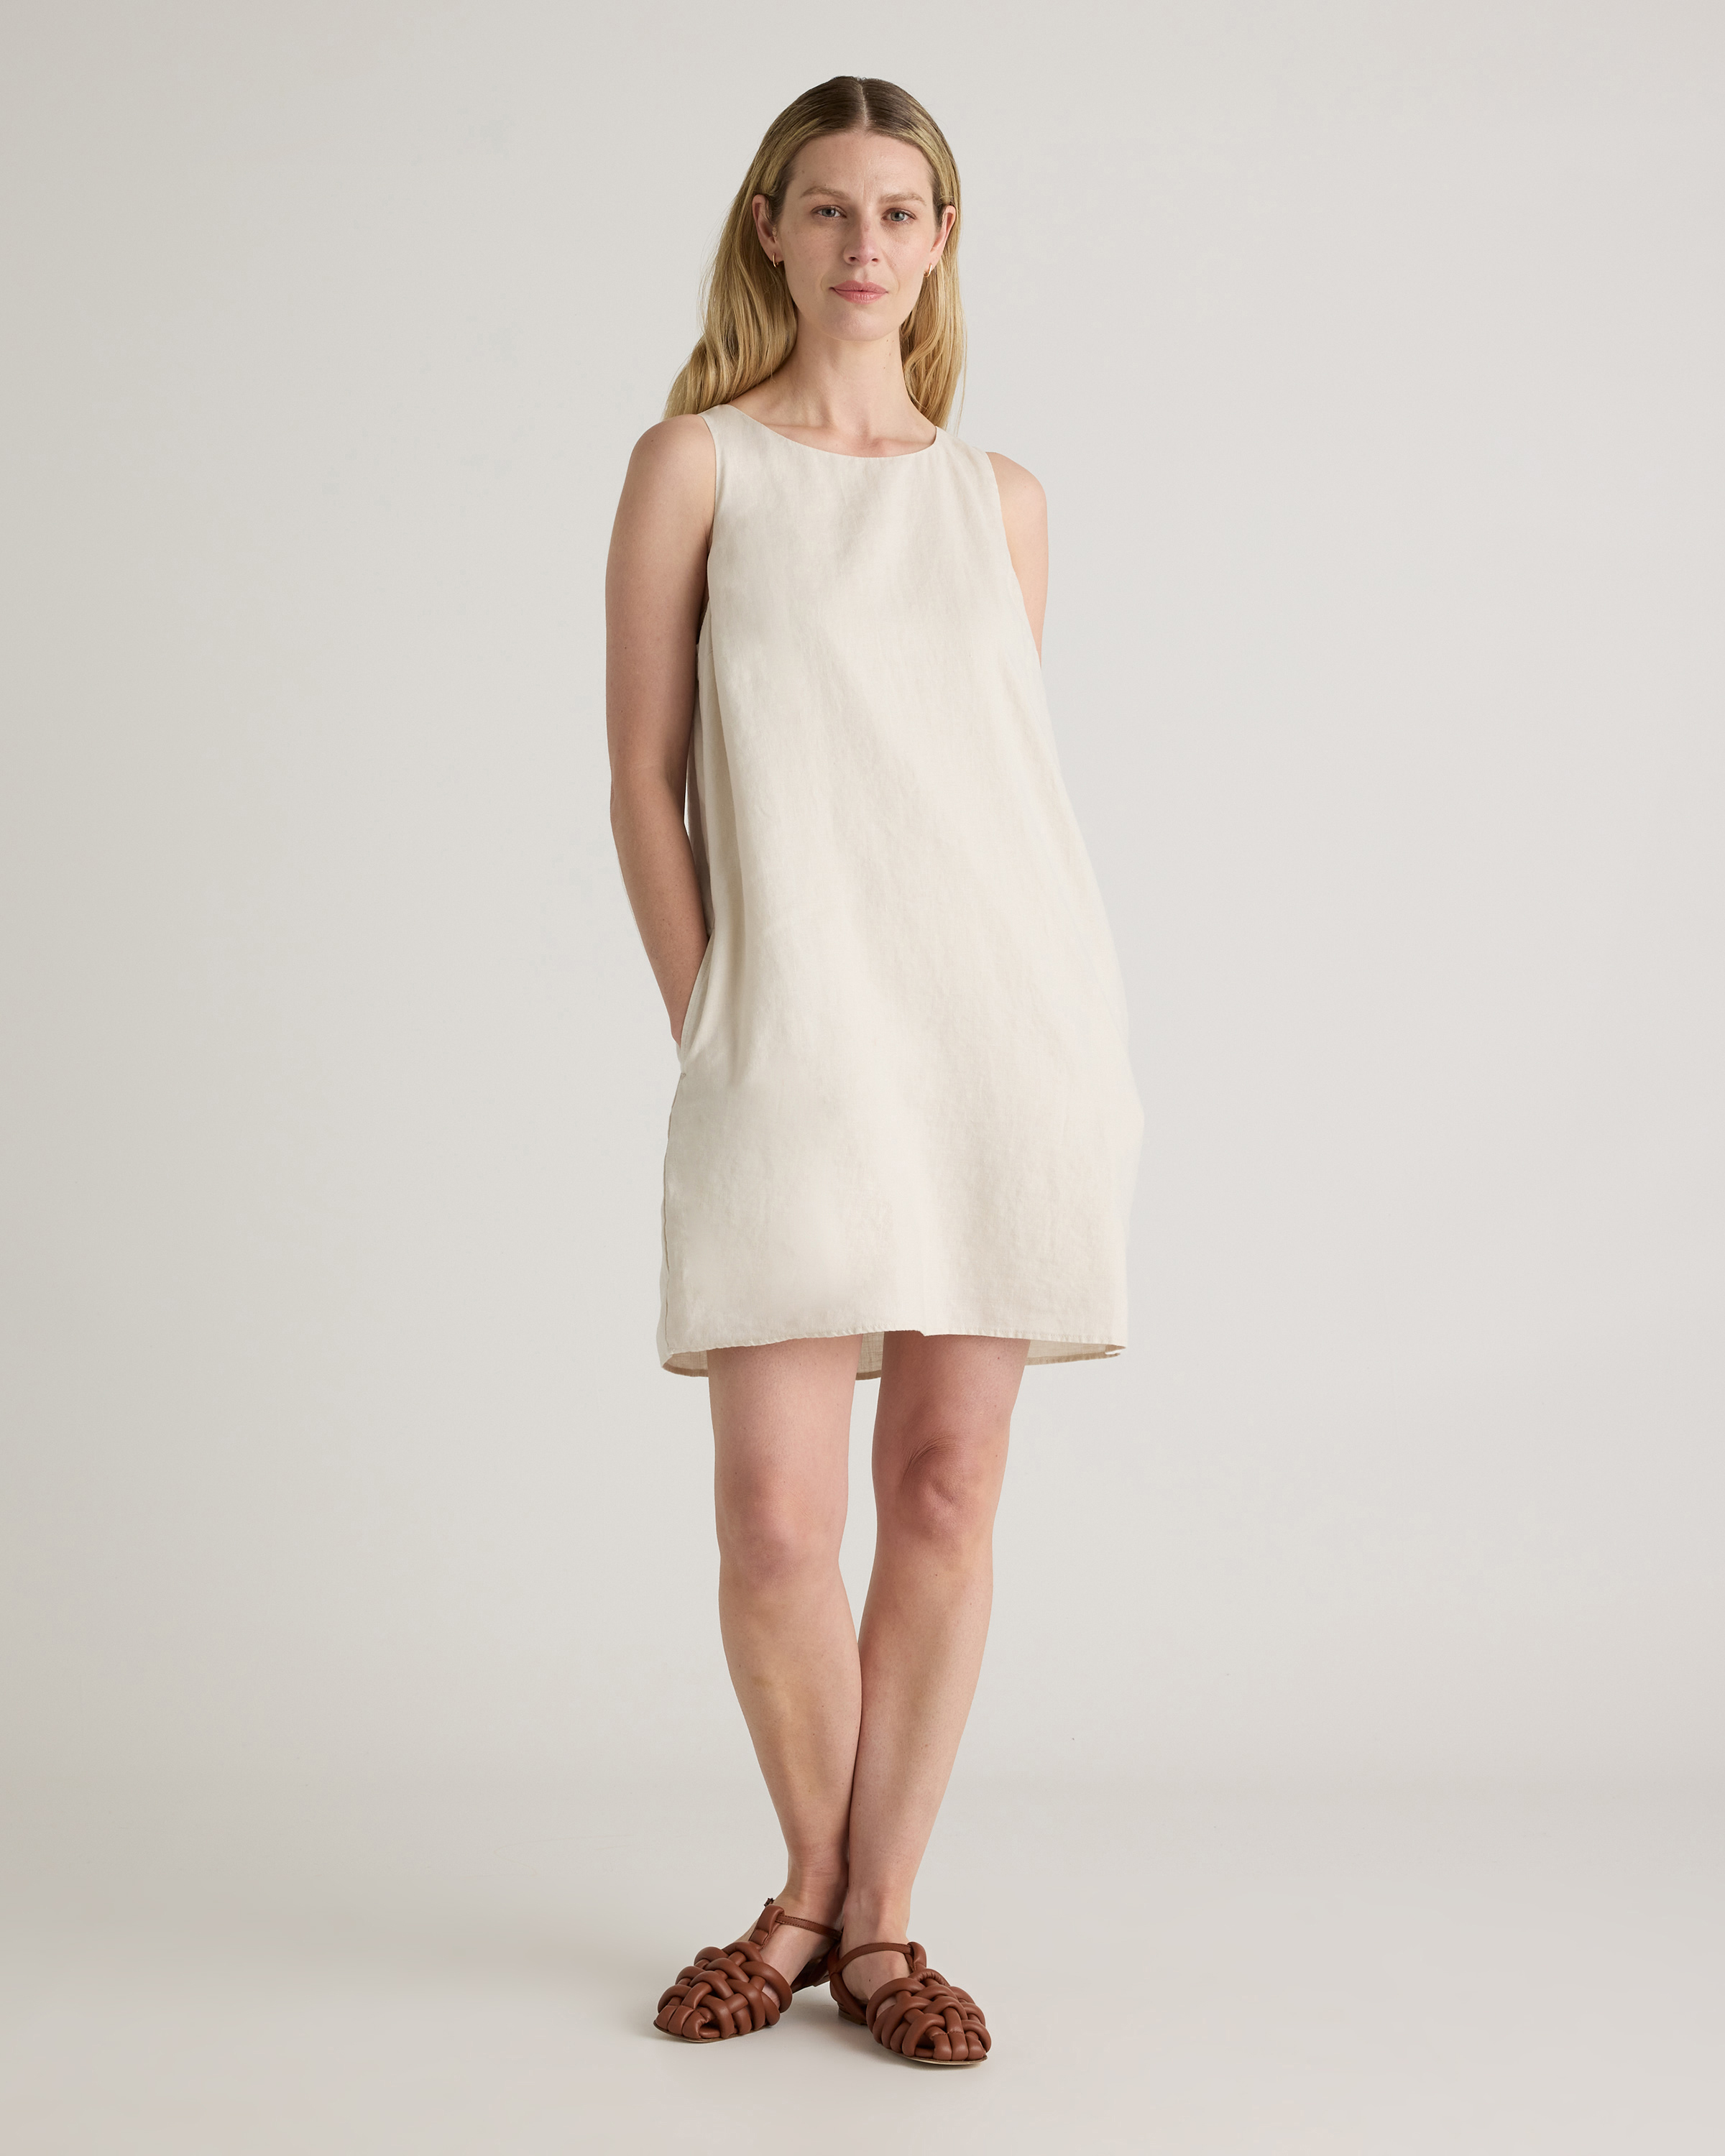 Quince Women's 100% European Linen Tank Top Mini Dress In White